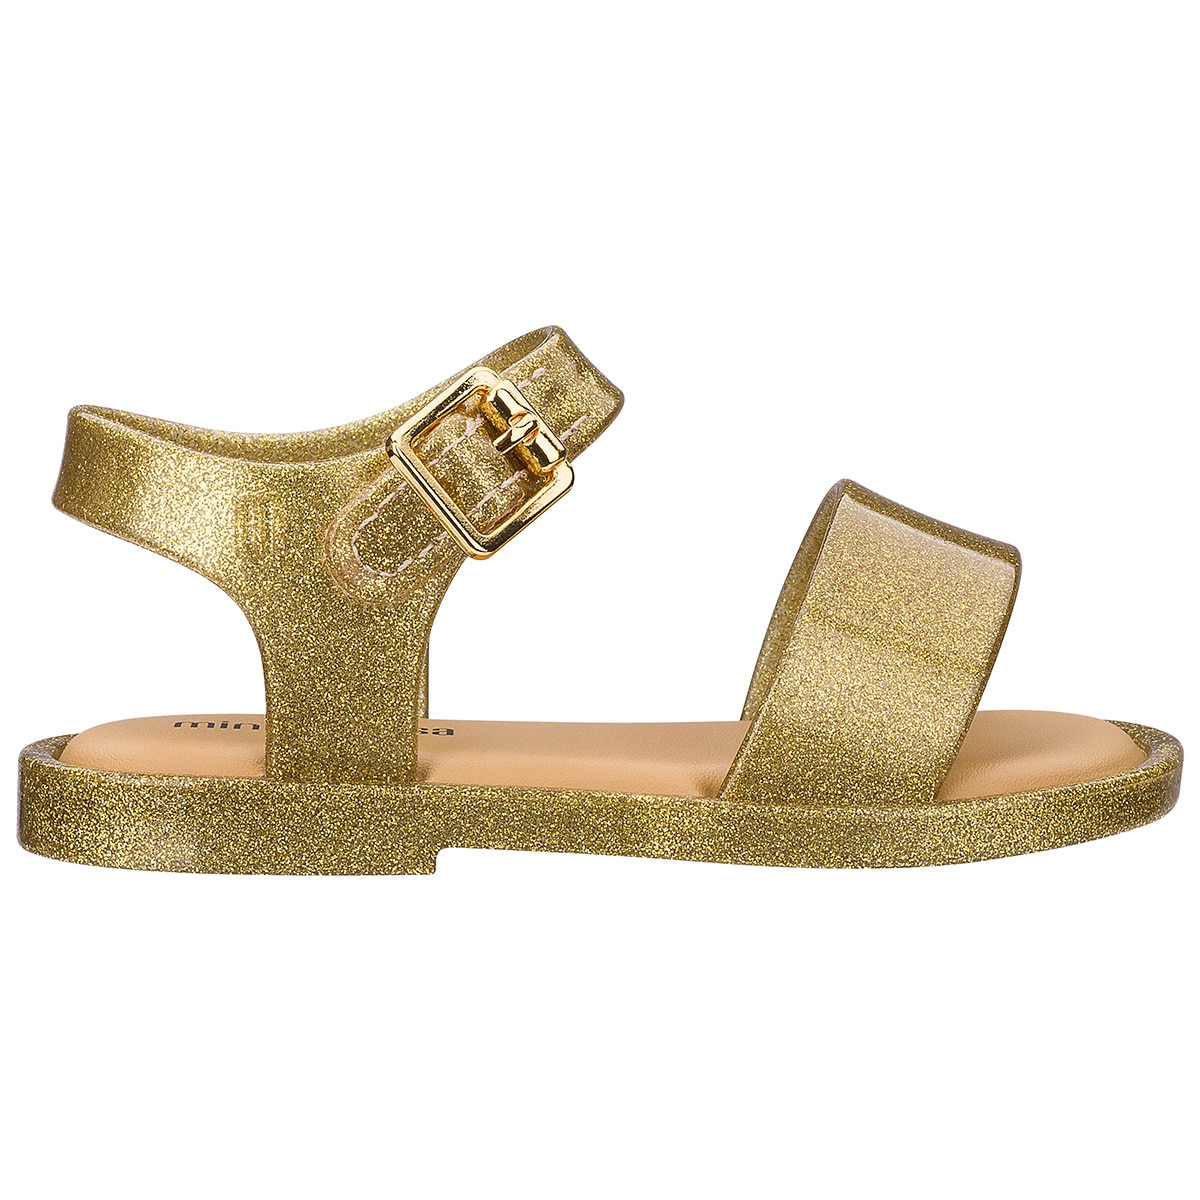 Mini Melissa Girl's Sandals - Gold